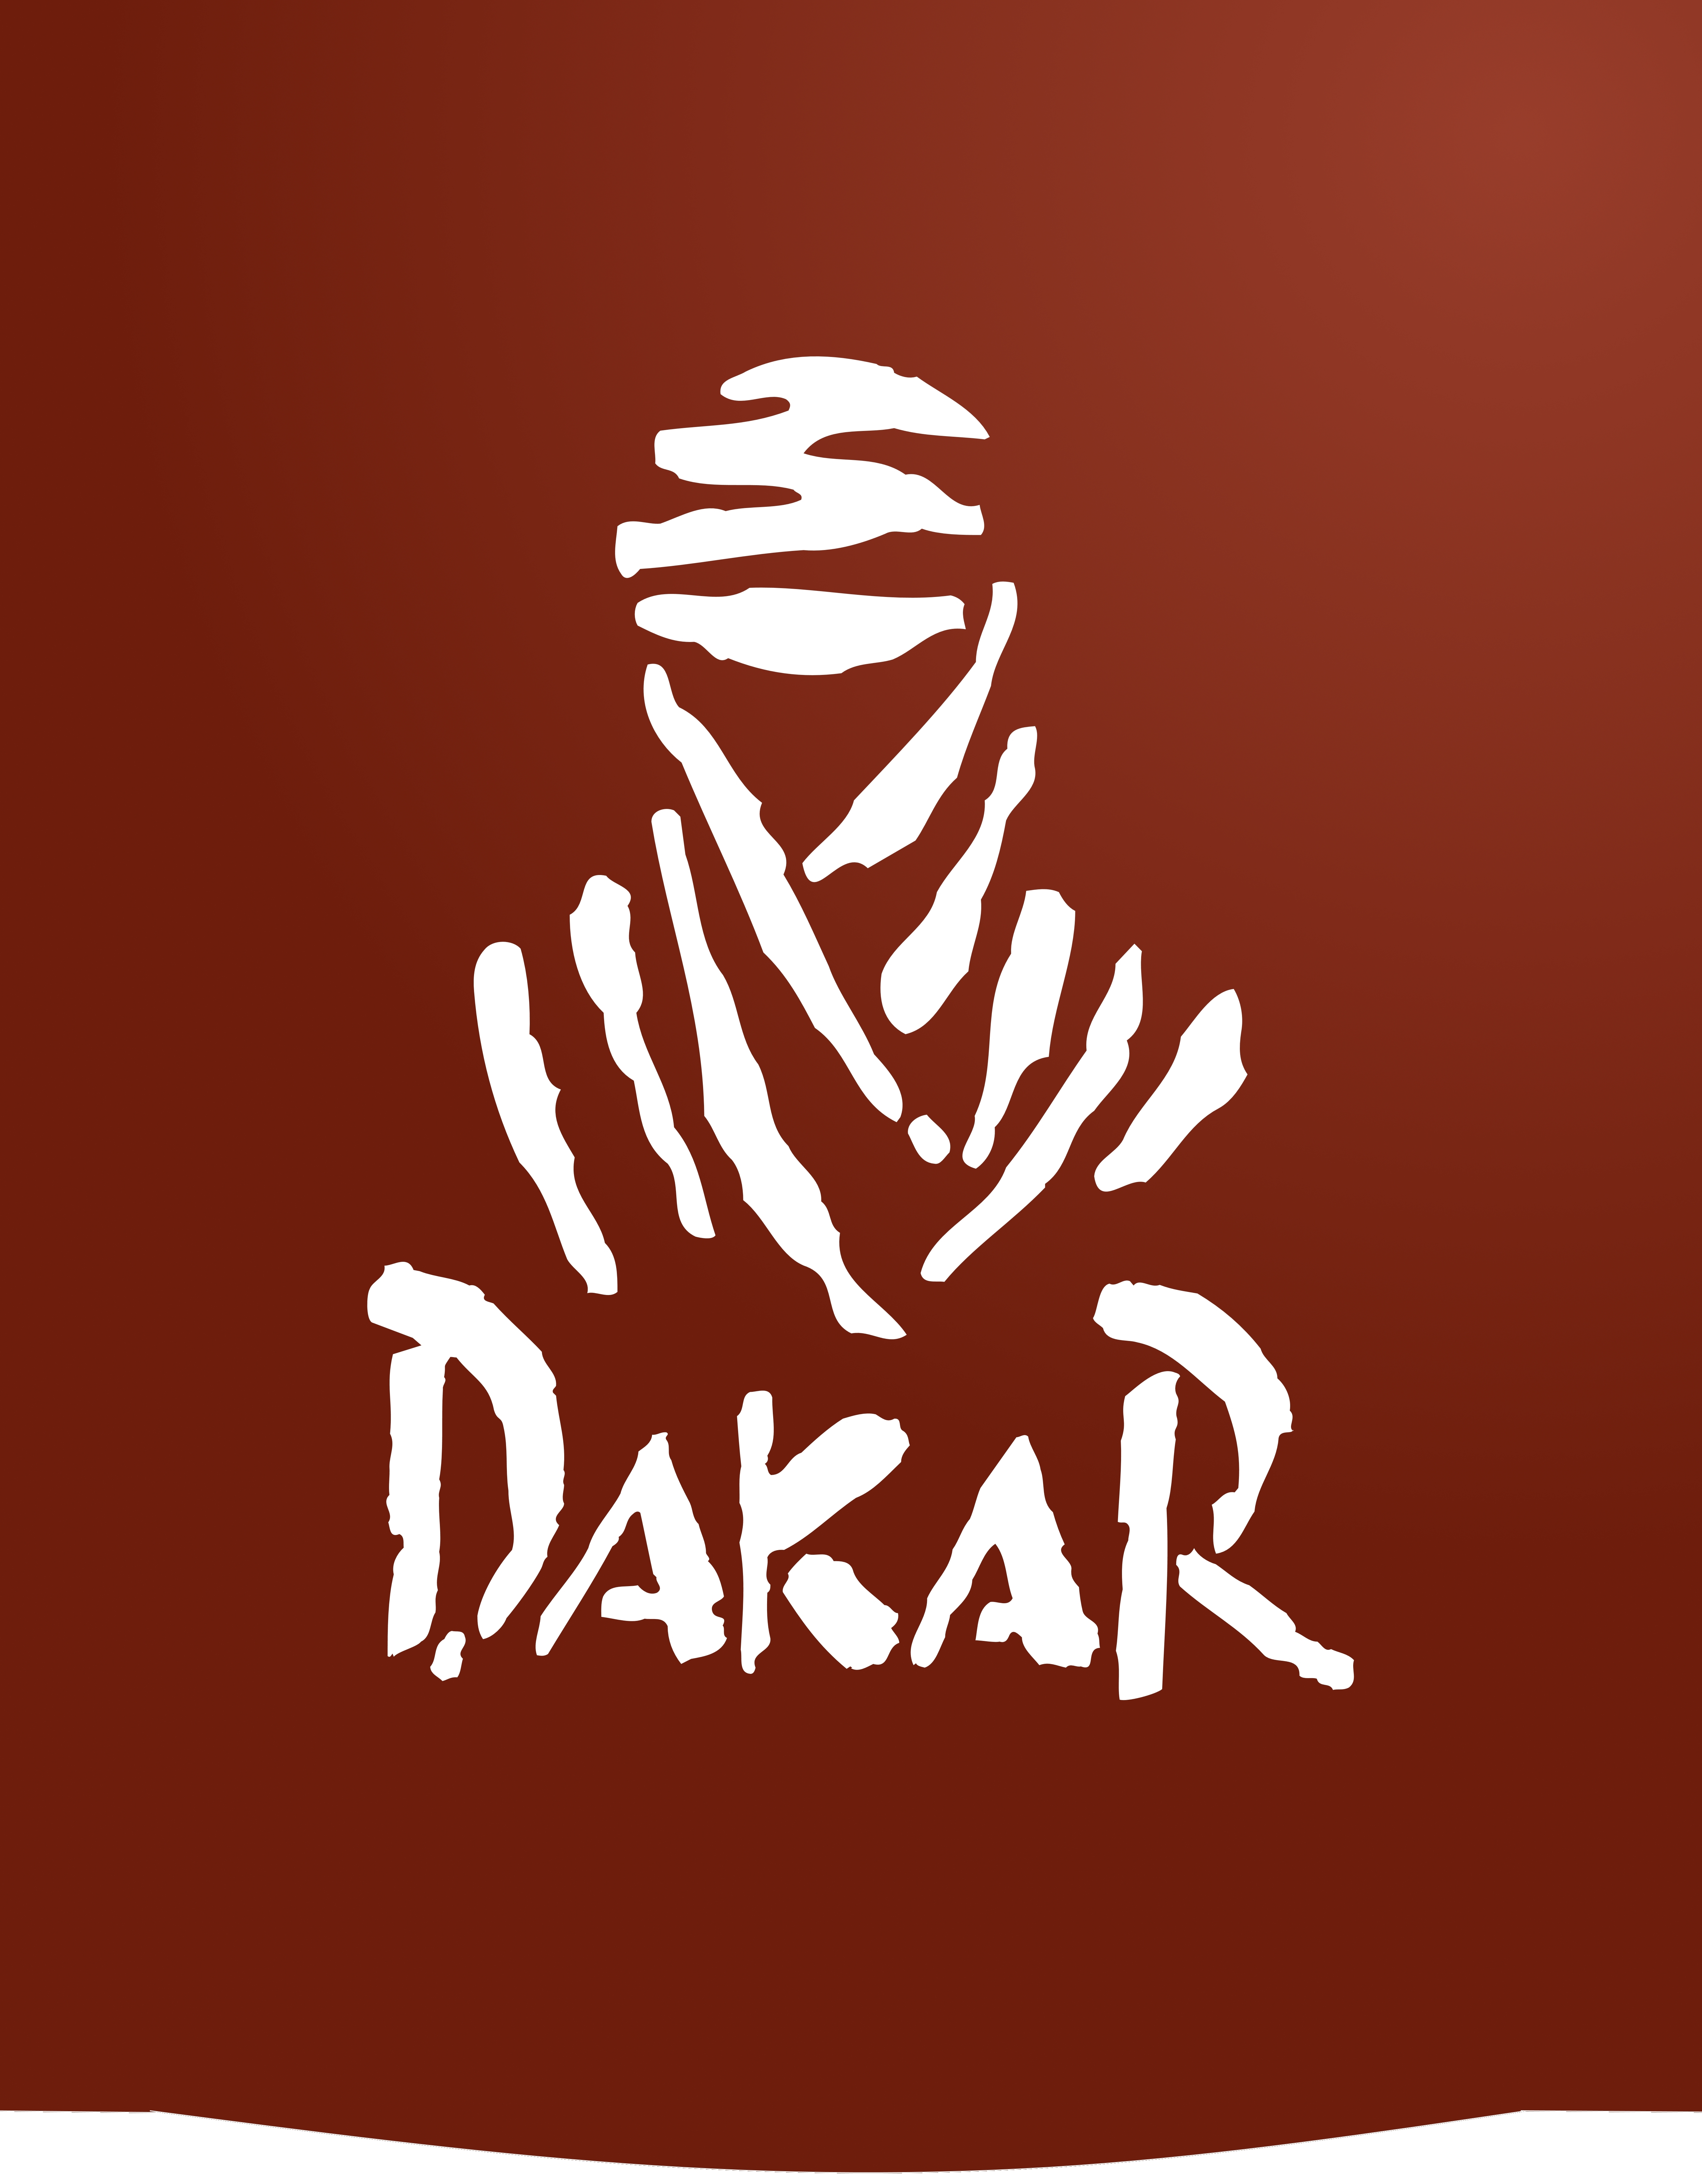 Dakar Png Images | Pngegg